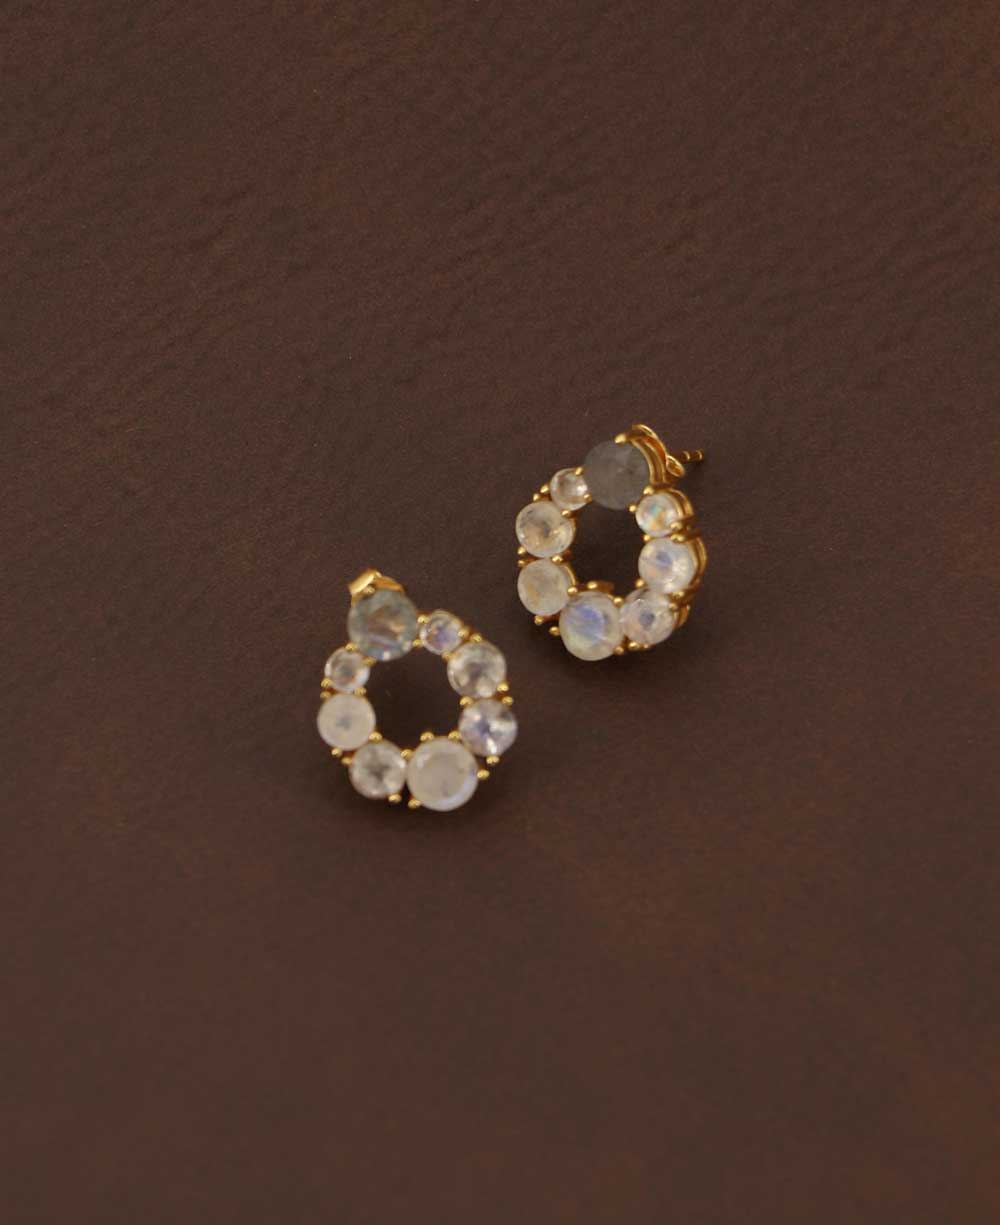 Gold Plated Moonstone Stud Earrings with Labradorite - Earrings